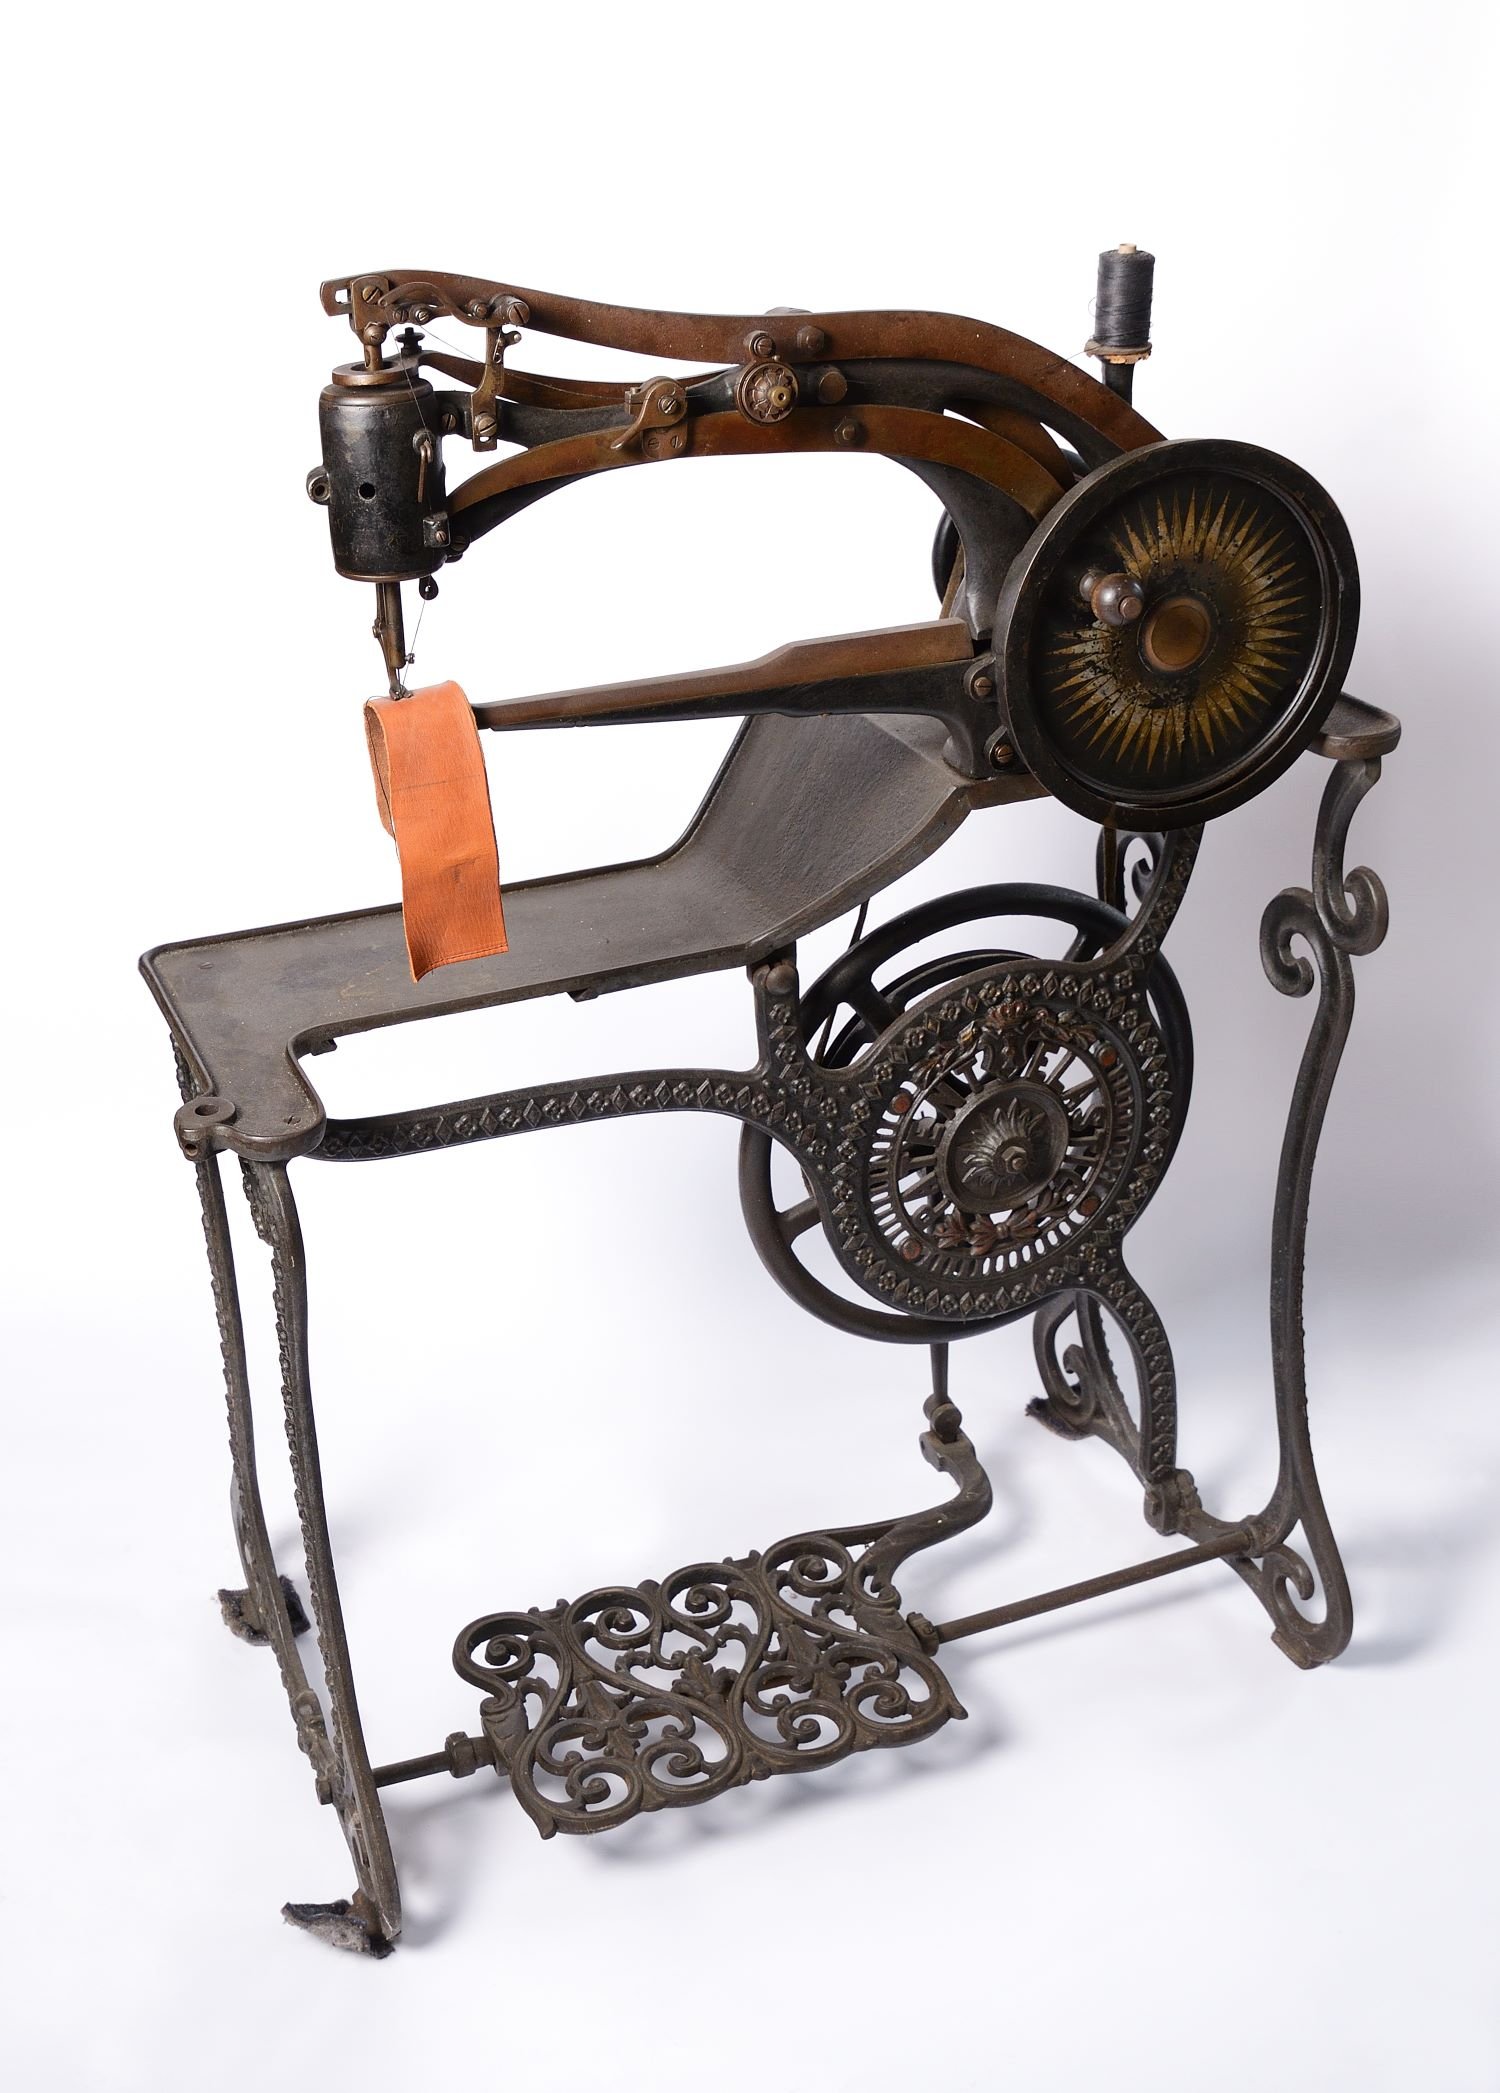 Sattlernähmaschine um 1880 (Museumsverbund Dahme-Spreewald CC BY-NC-SA)